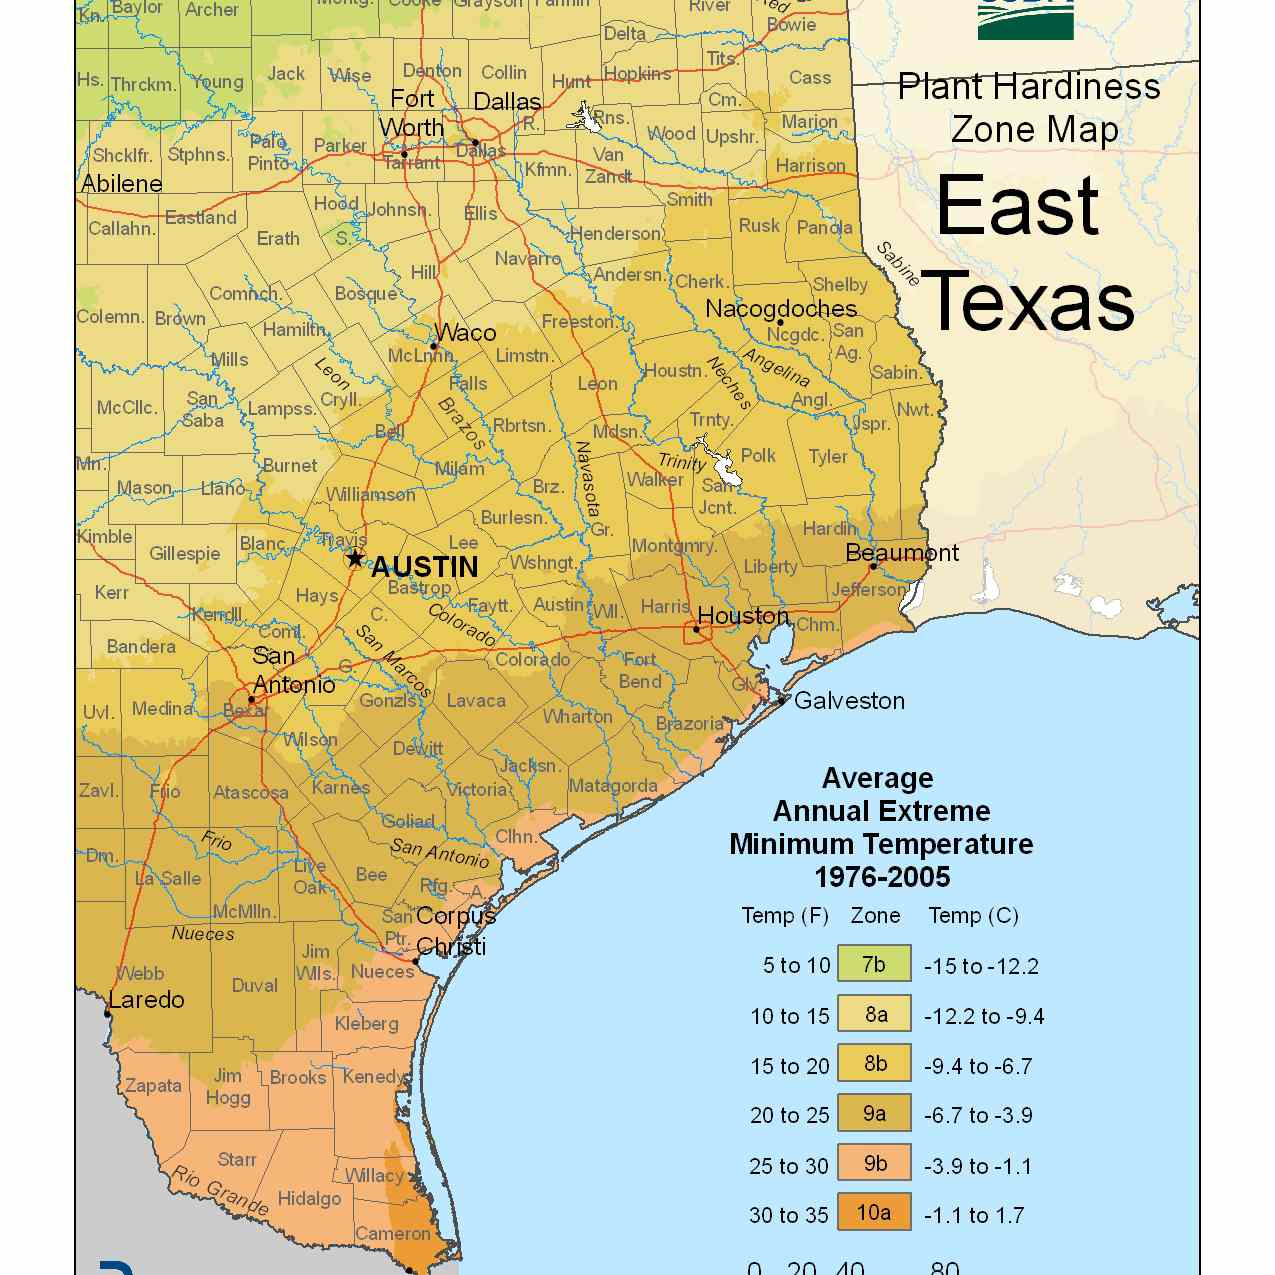 State Maps Of Usda Plant Hardiness Zones - Usda Zone Map Texas